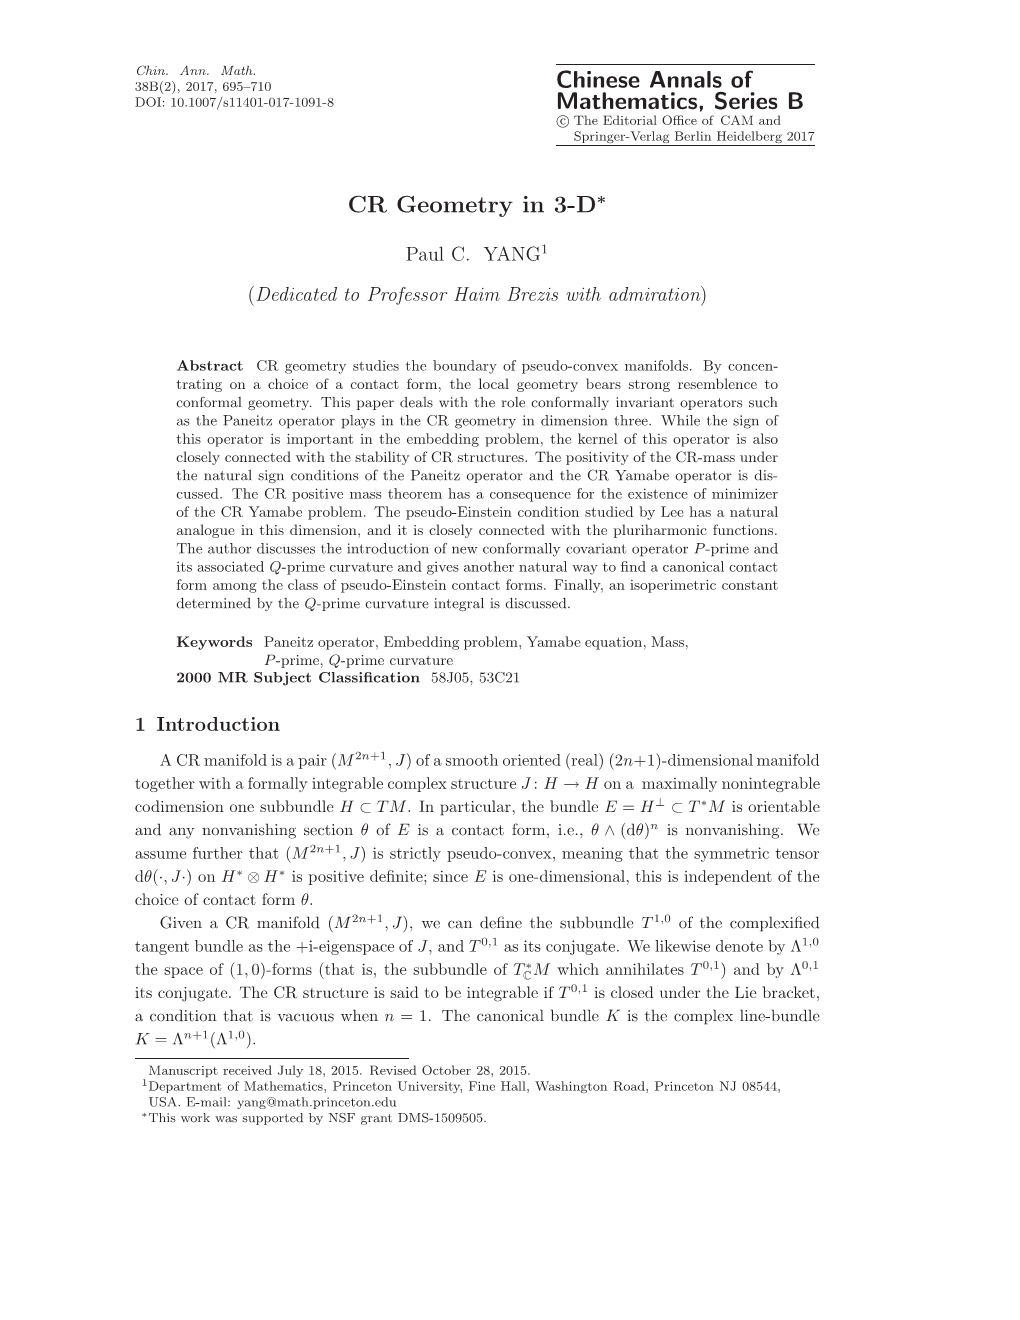 Chinese Annals of Mathematics, Series B CR Geometry In